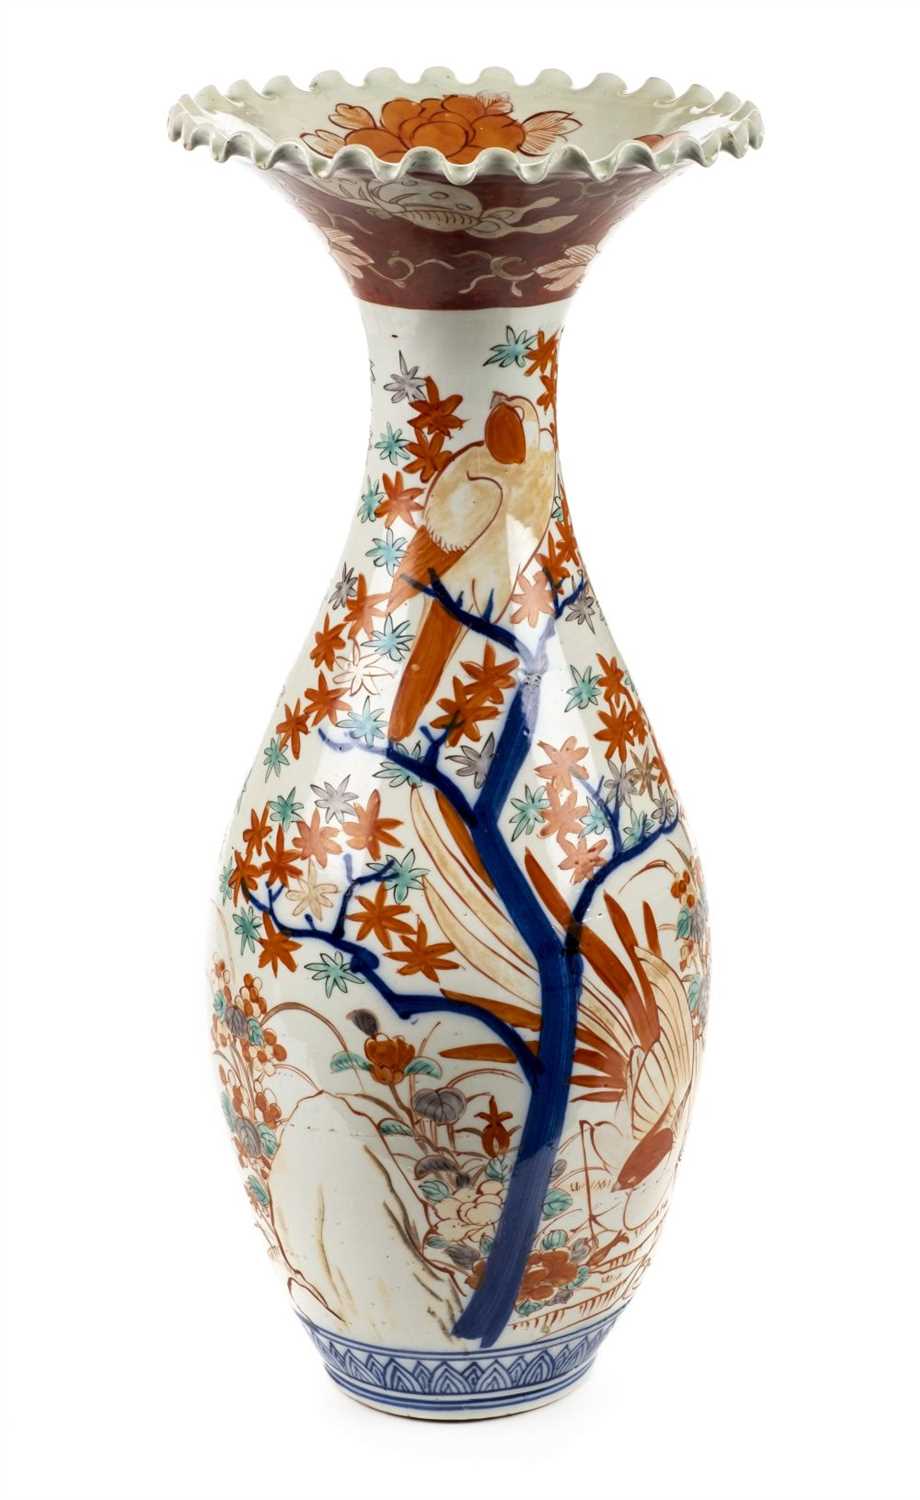 Lot 81 - Imari vase. A large and impressive Japanese Imari vase circa 1870